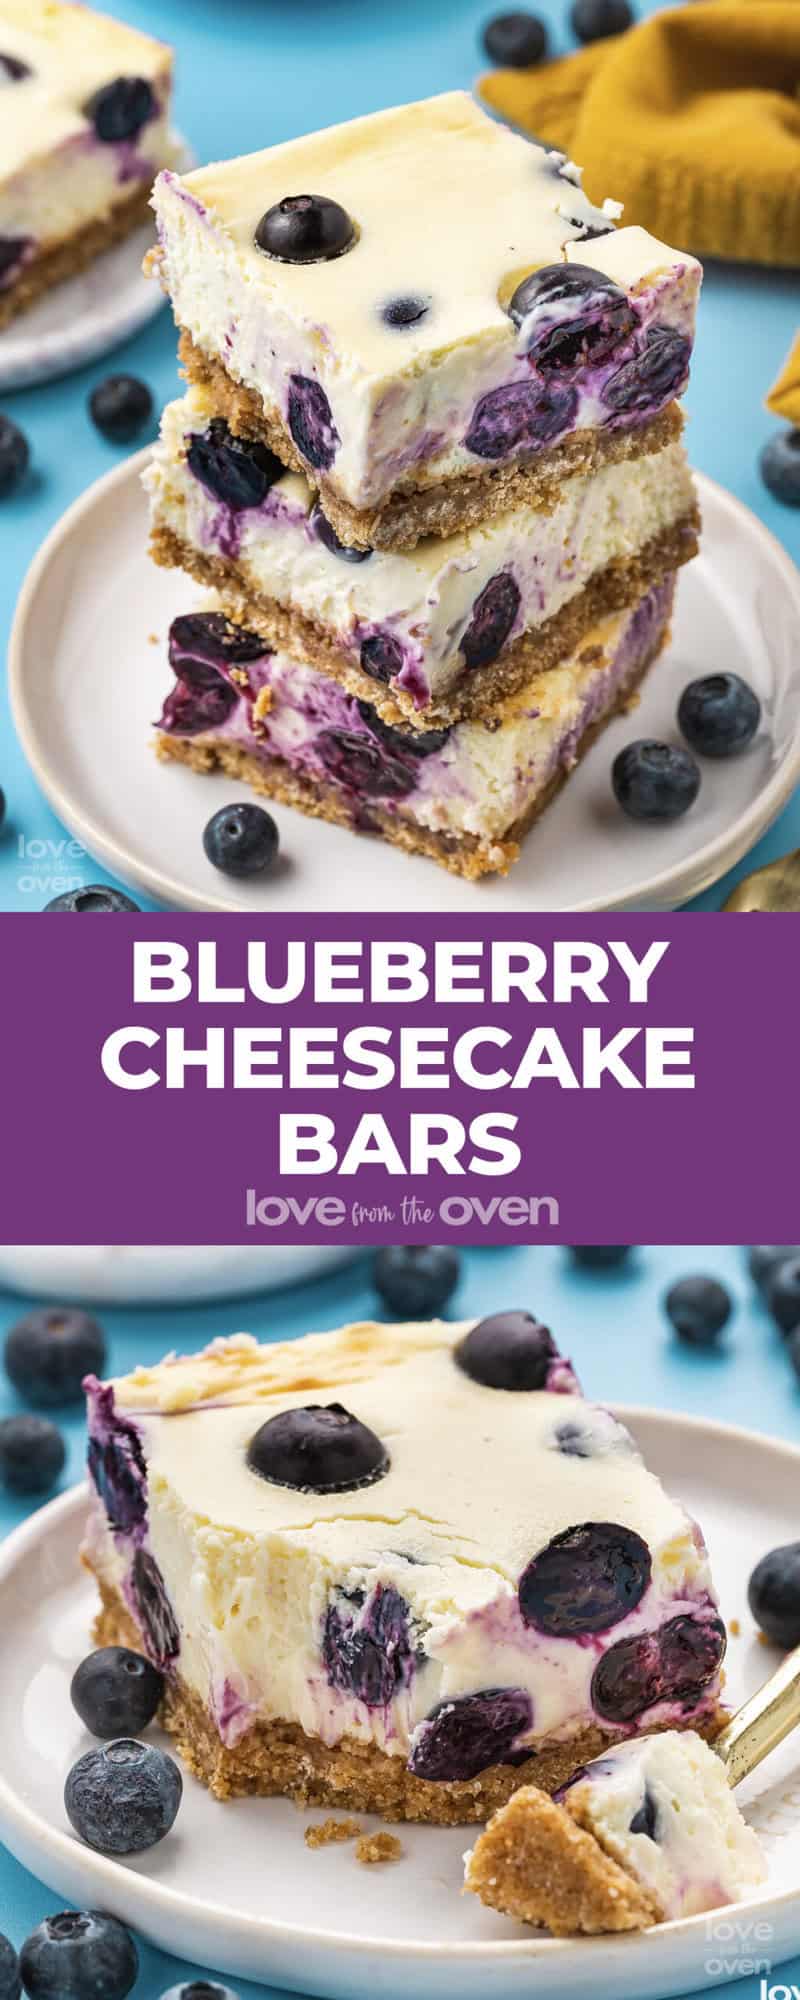 Photos of blueberry cheesecake bars.